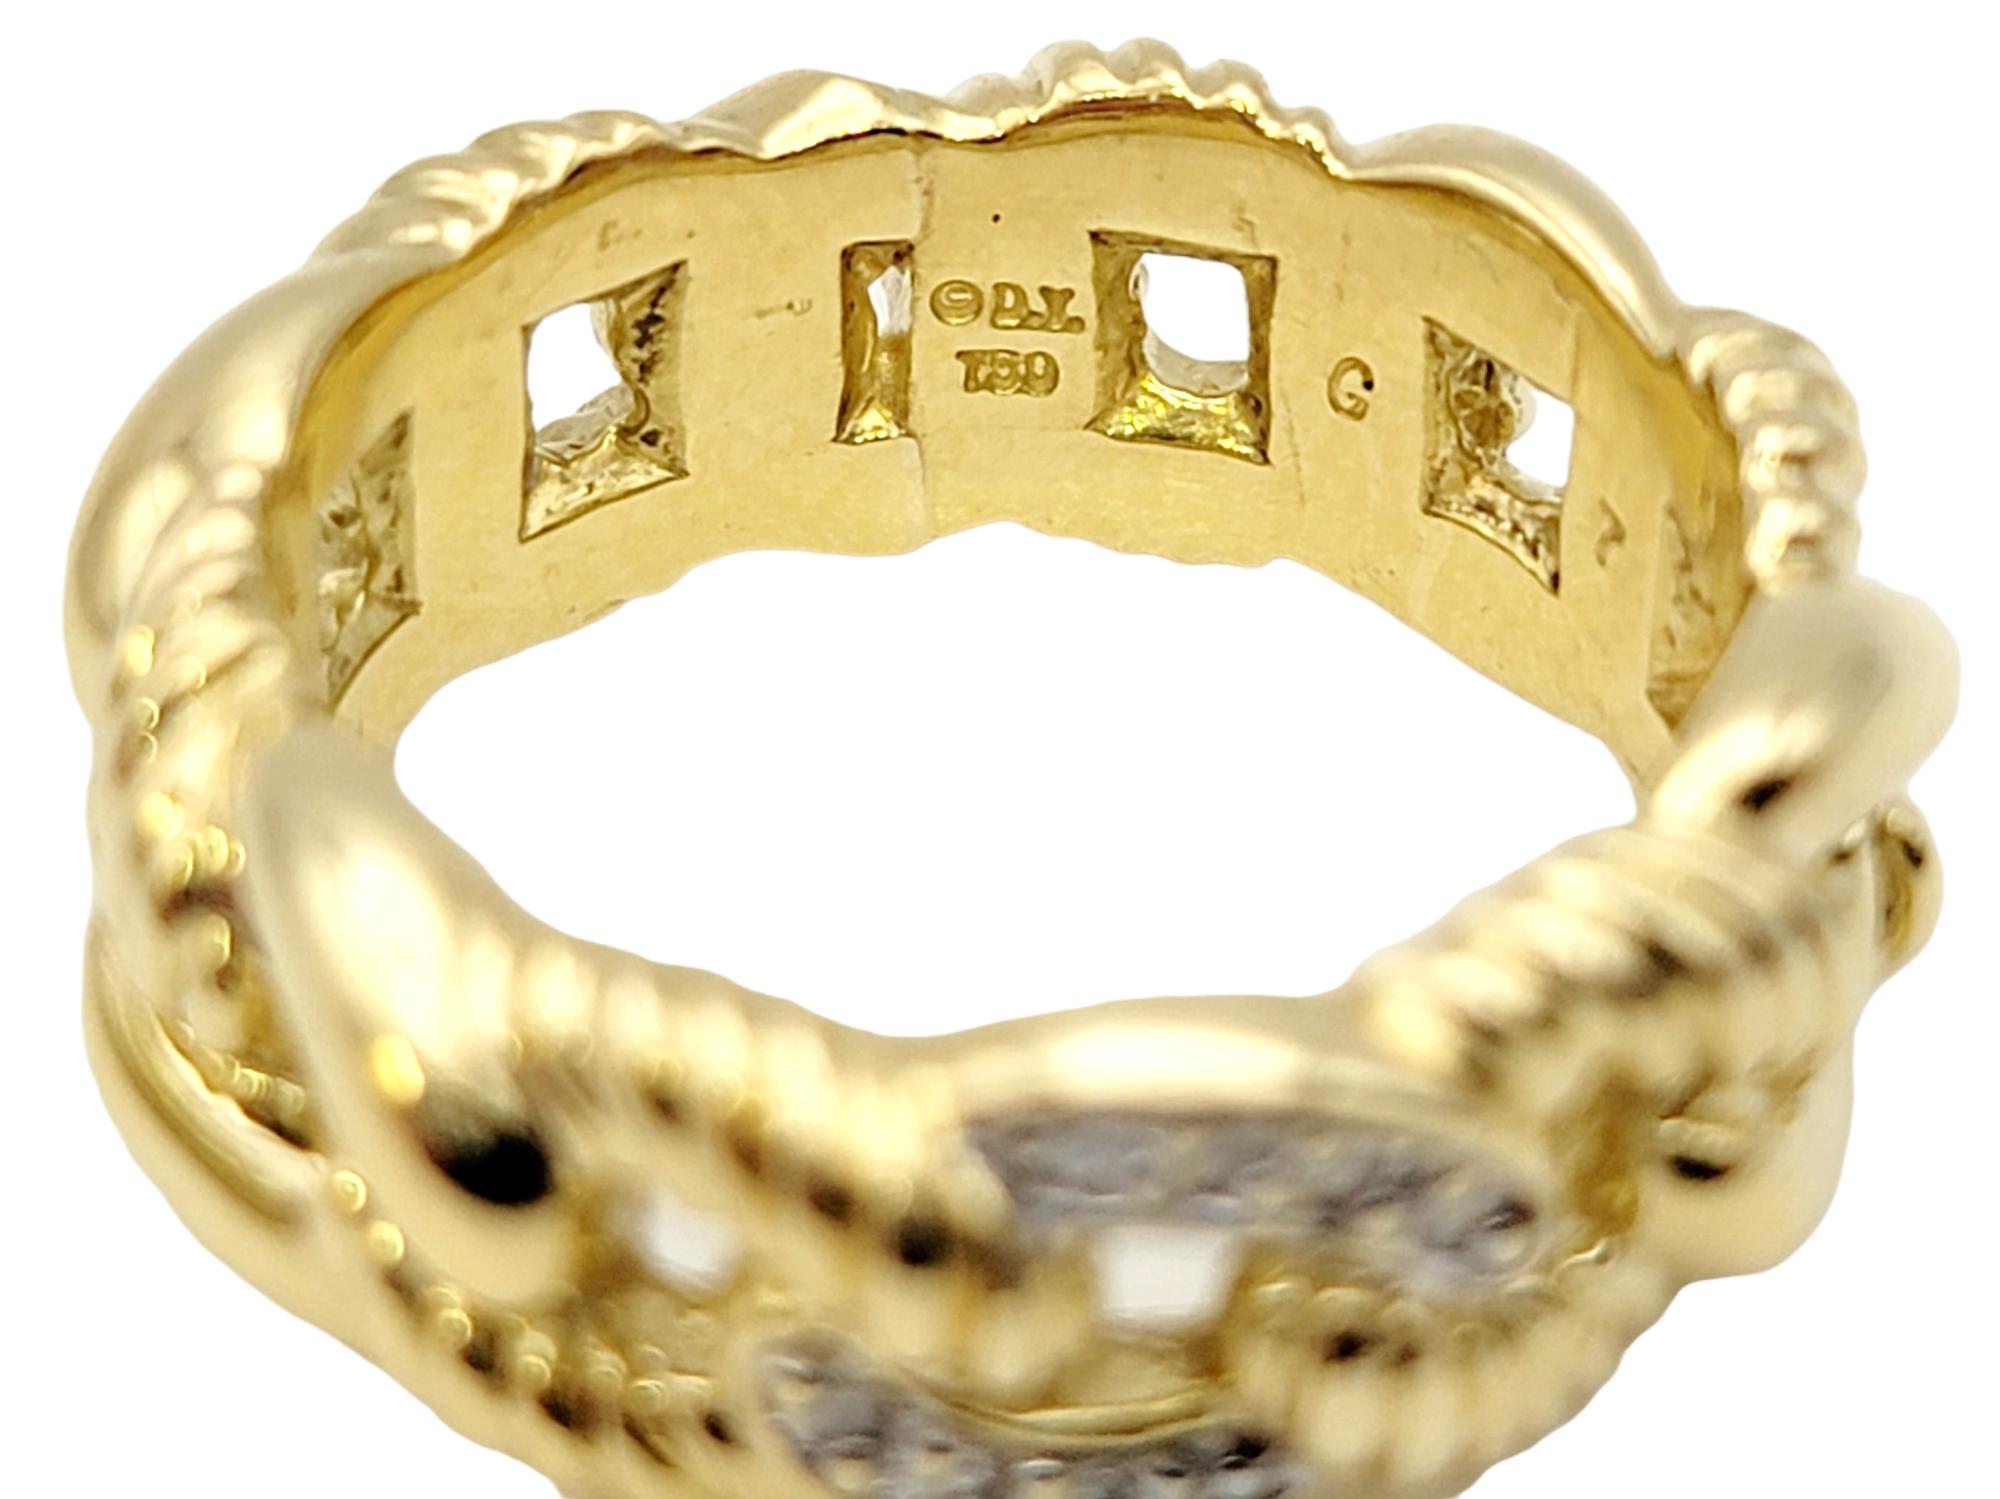 Contemporary David Yurman Polished 18 Karat Yellow Gold Twisted Chain Link Ring with Diamonds